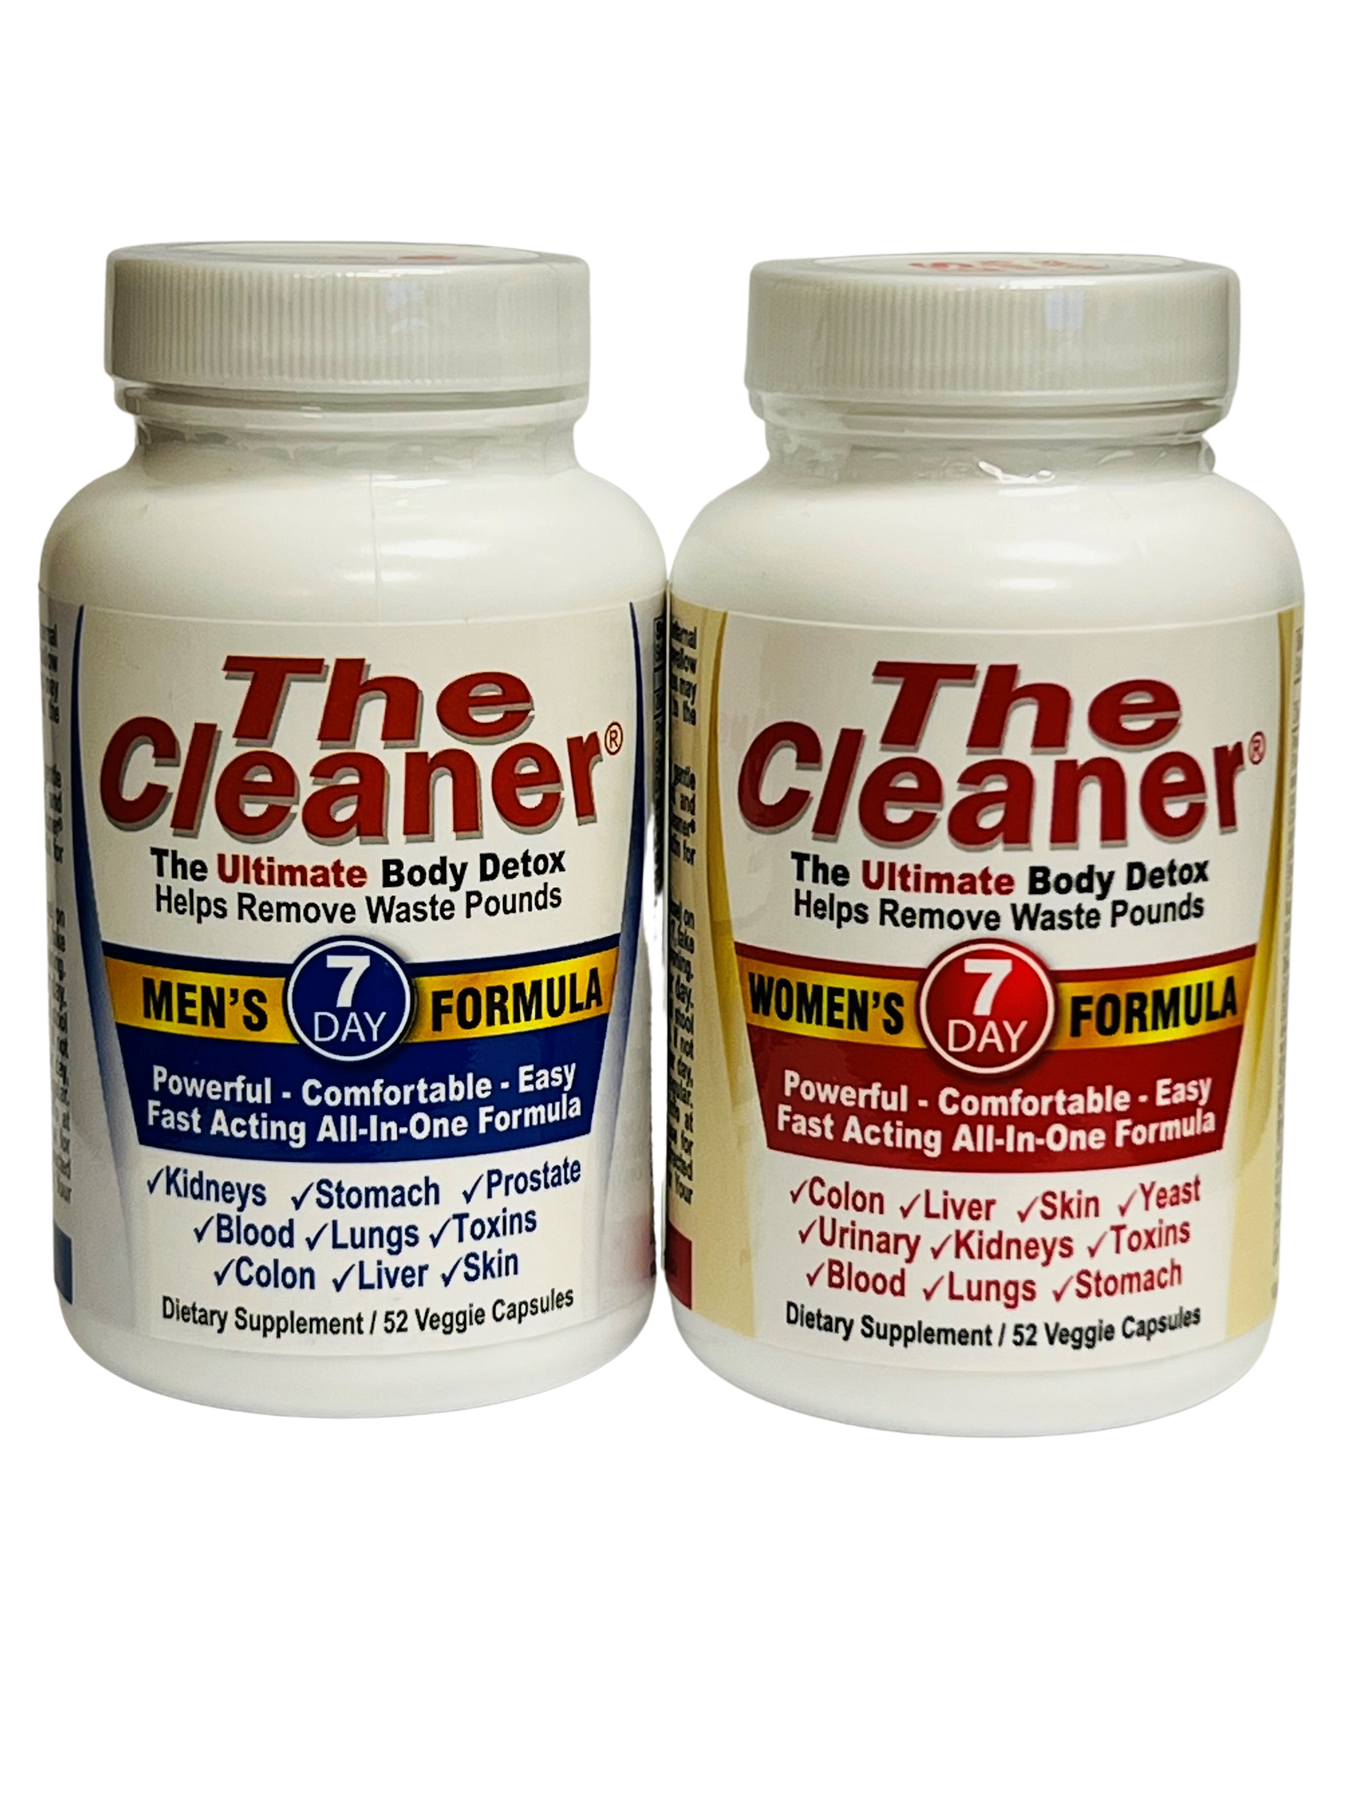 The Cleaner® 7 Day Men's Formula